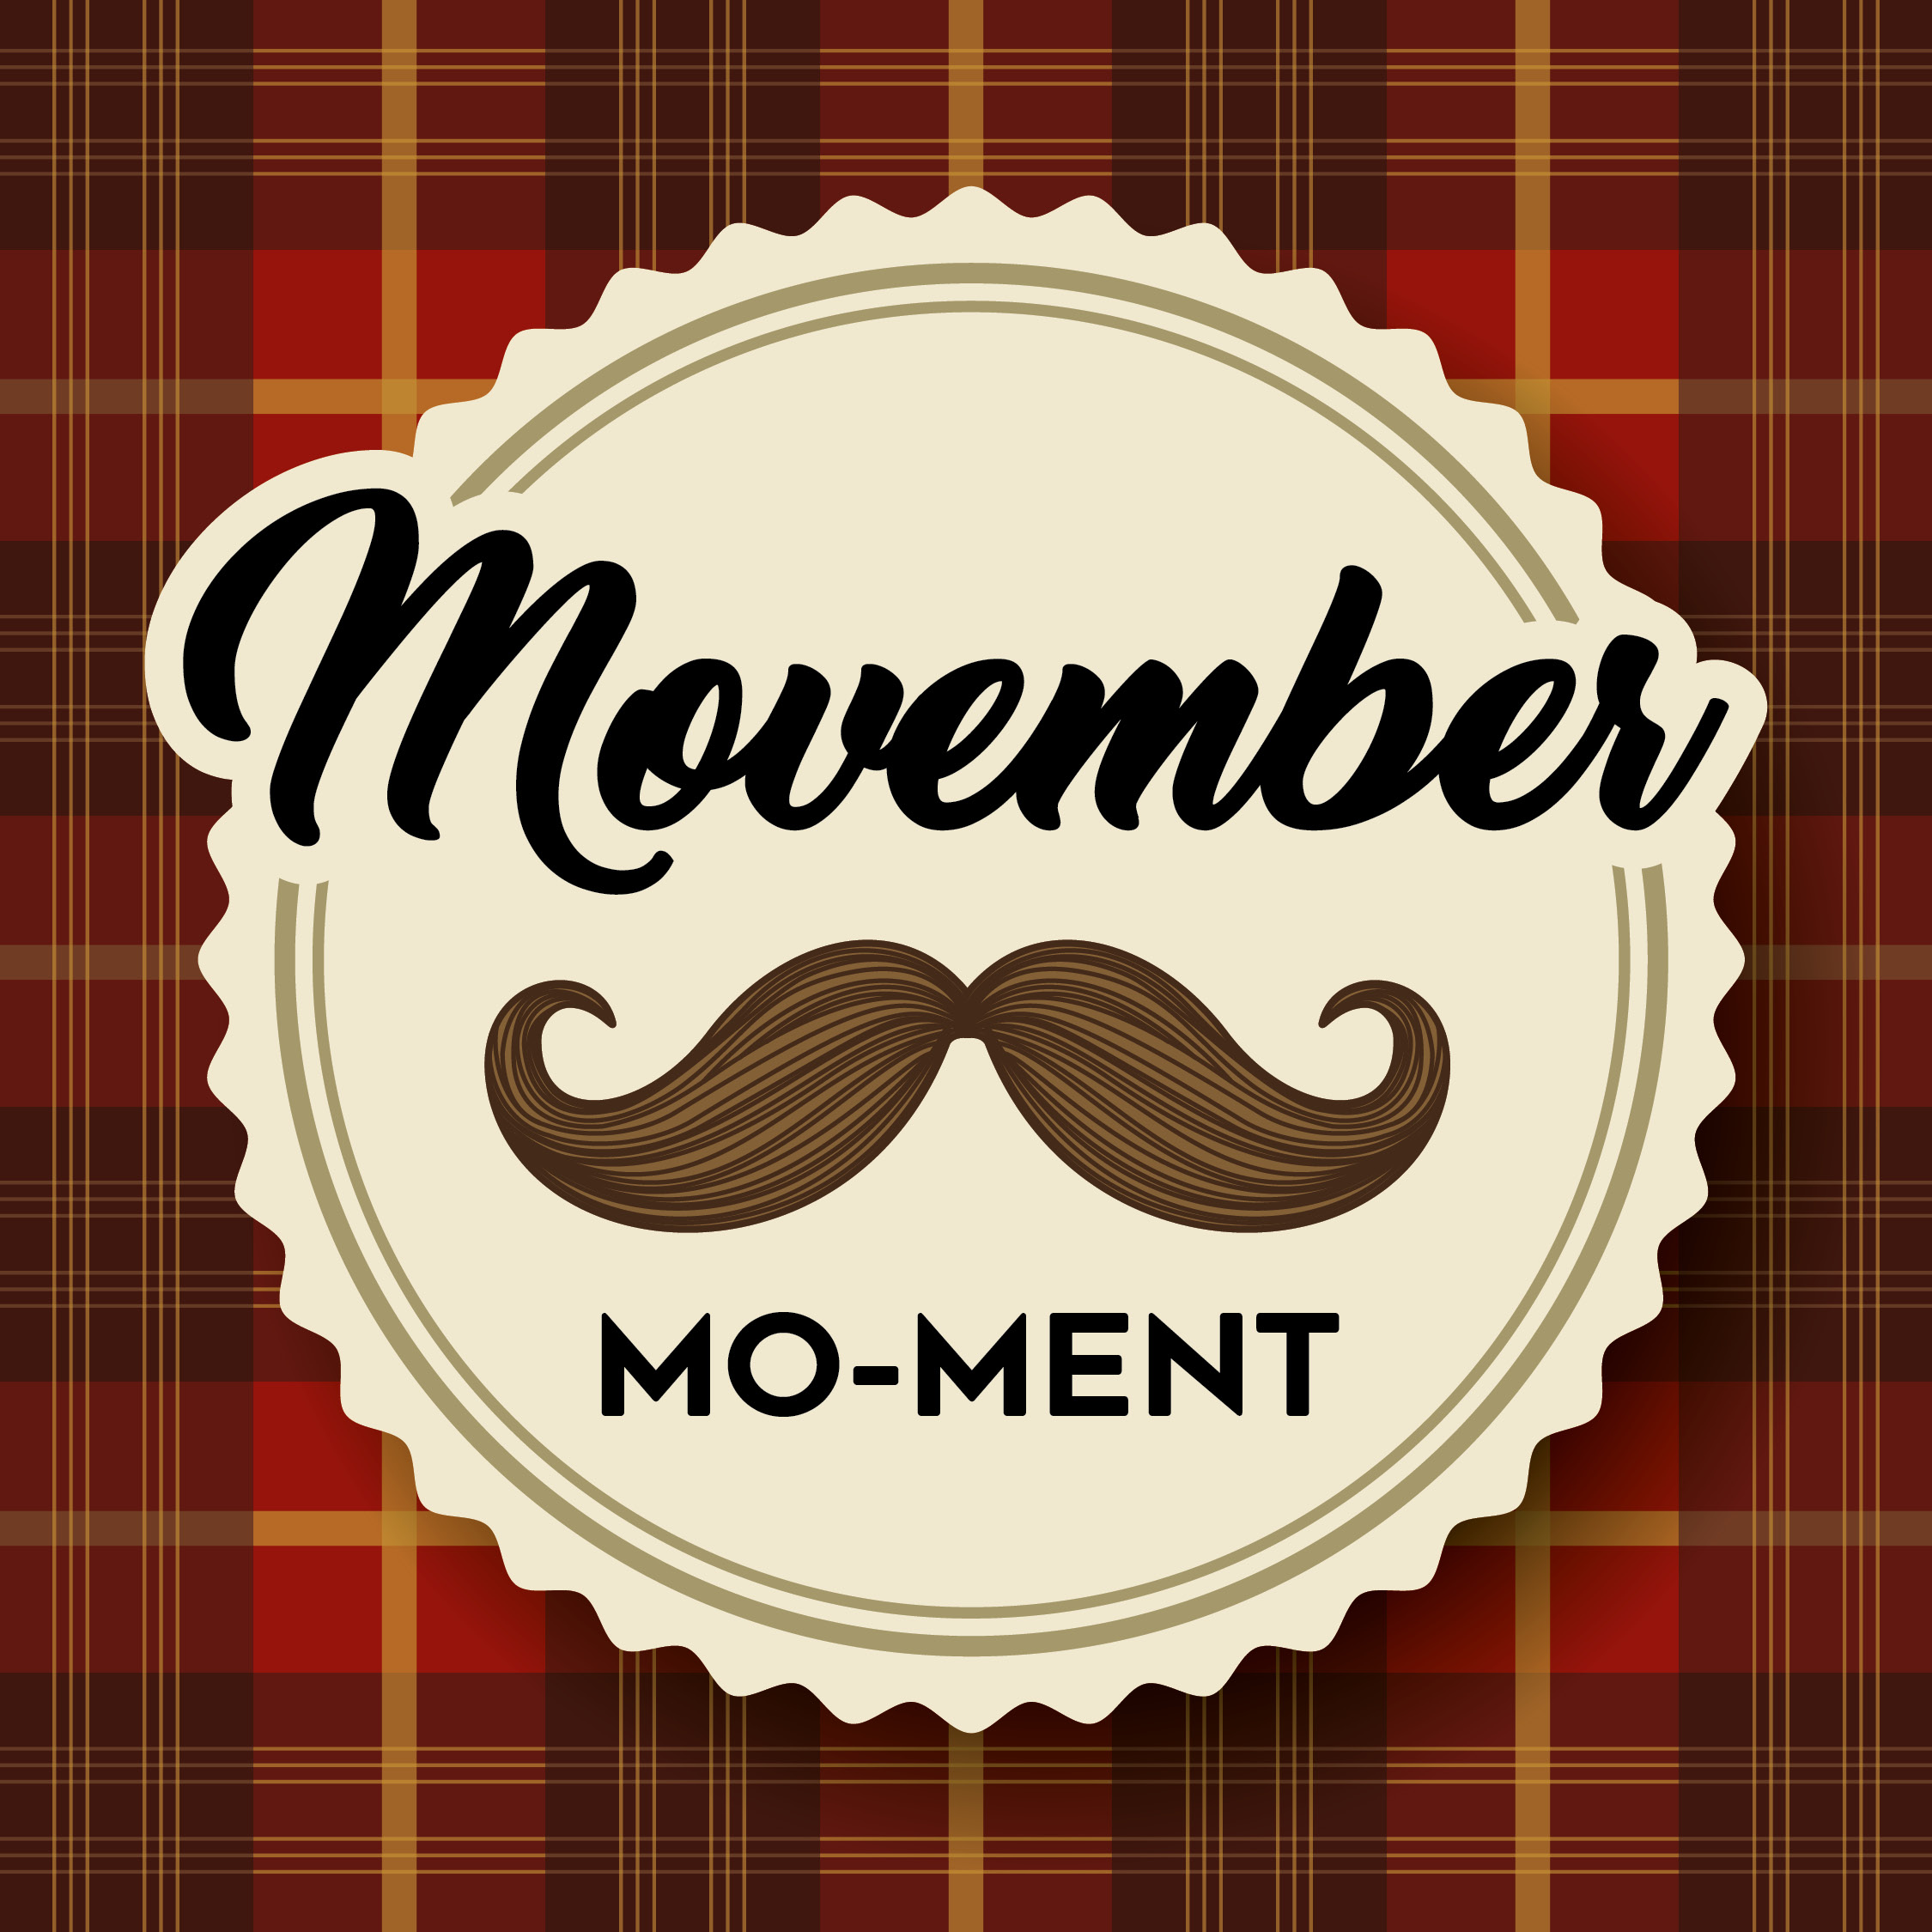 Ingenia Gardens Activate Movember - Nov